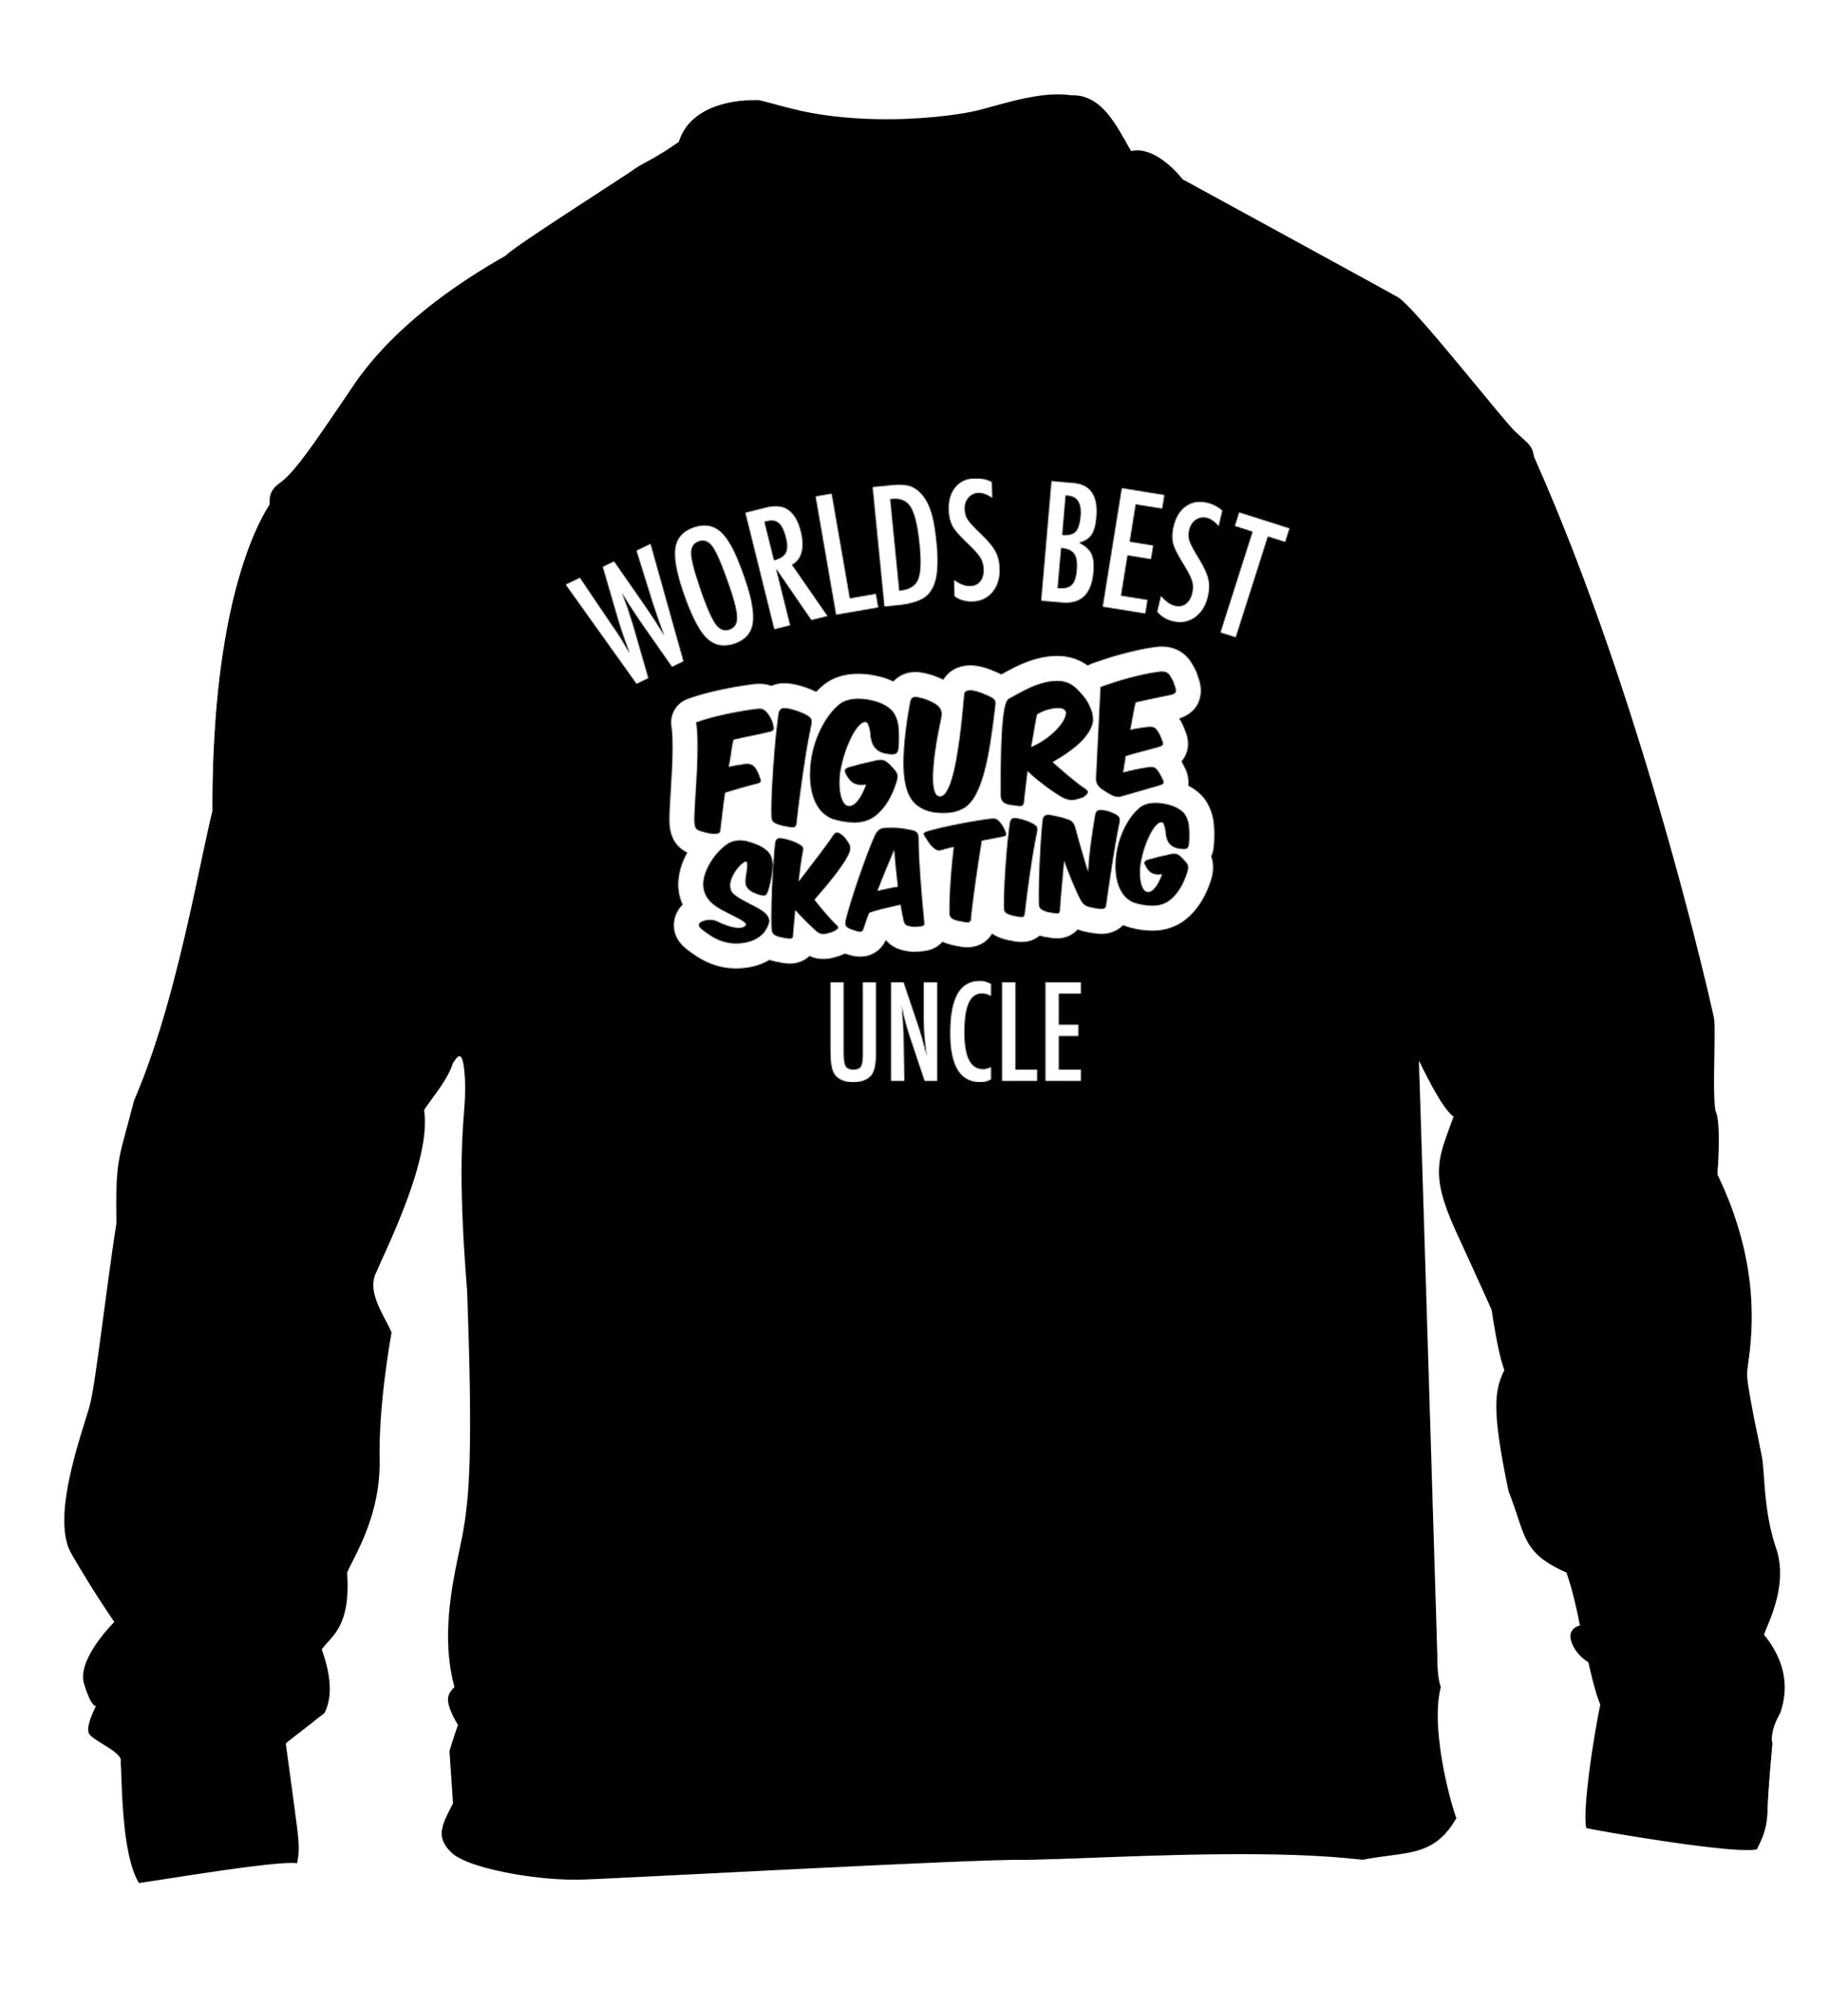 Worlds best figure skating uncle children's black sweater 12-14 Years